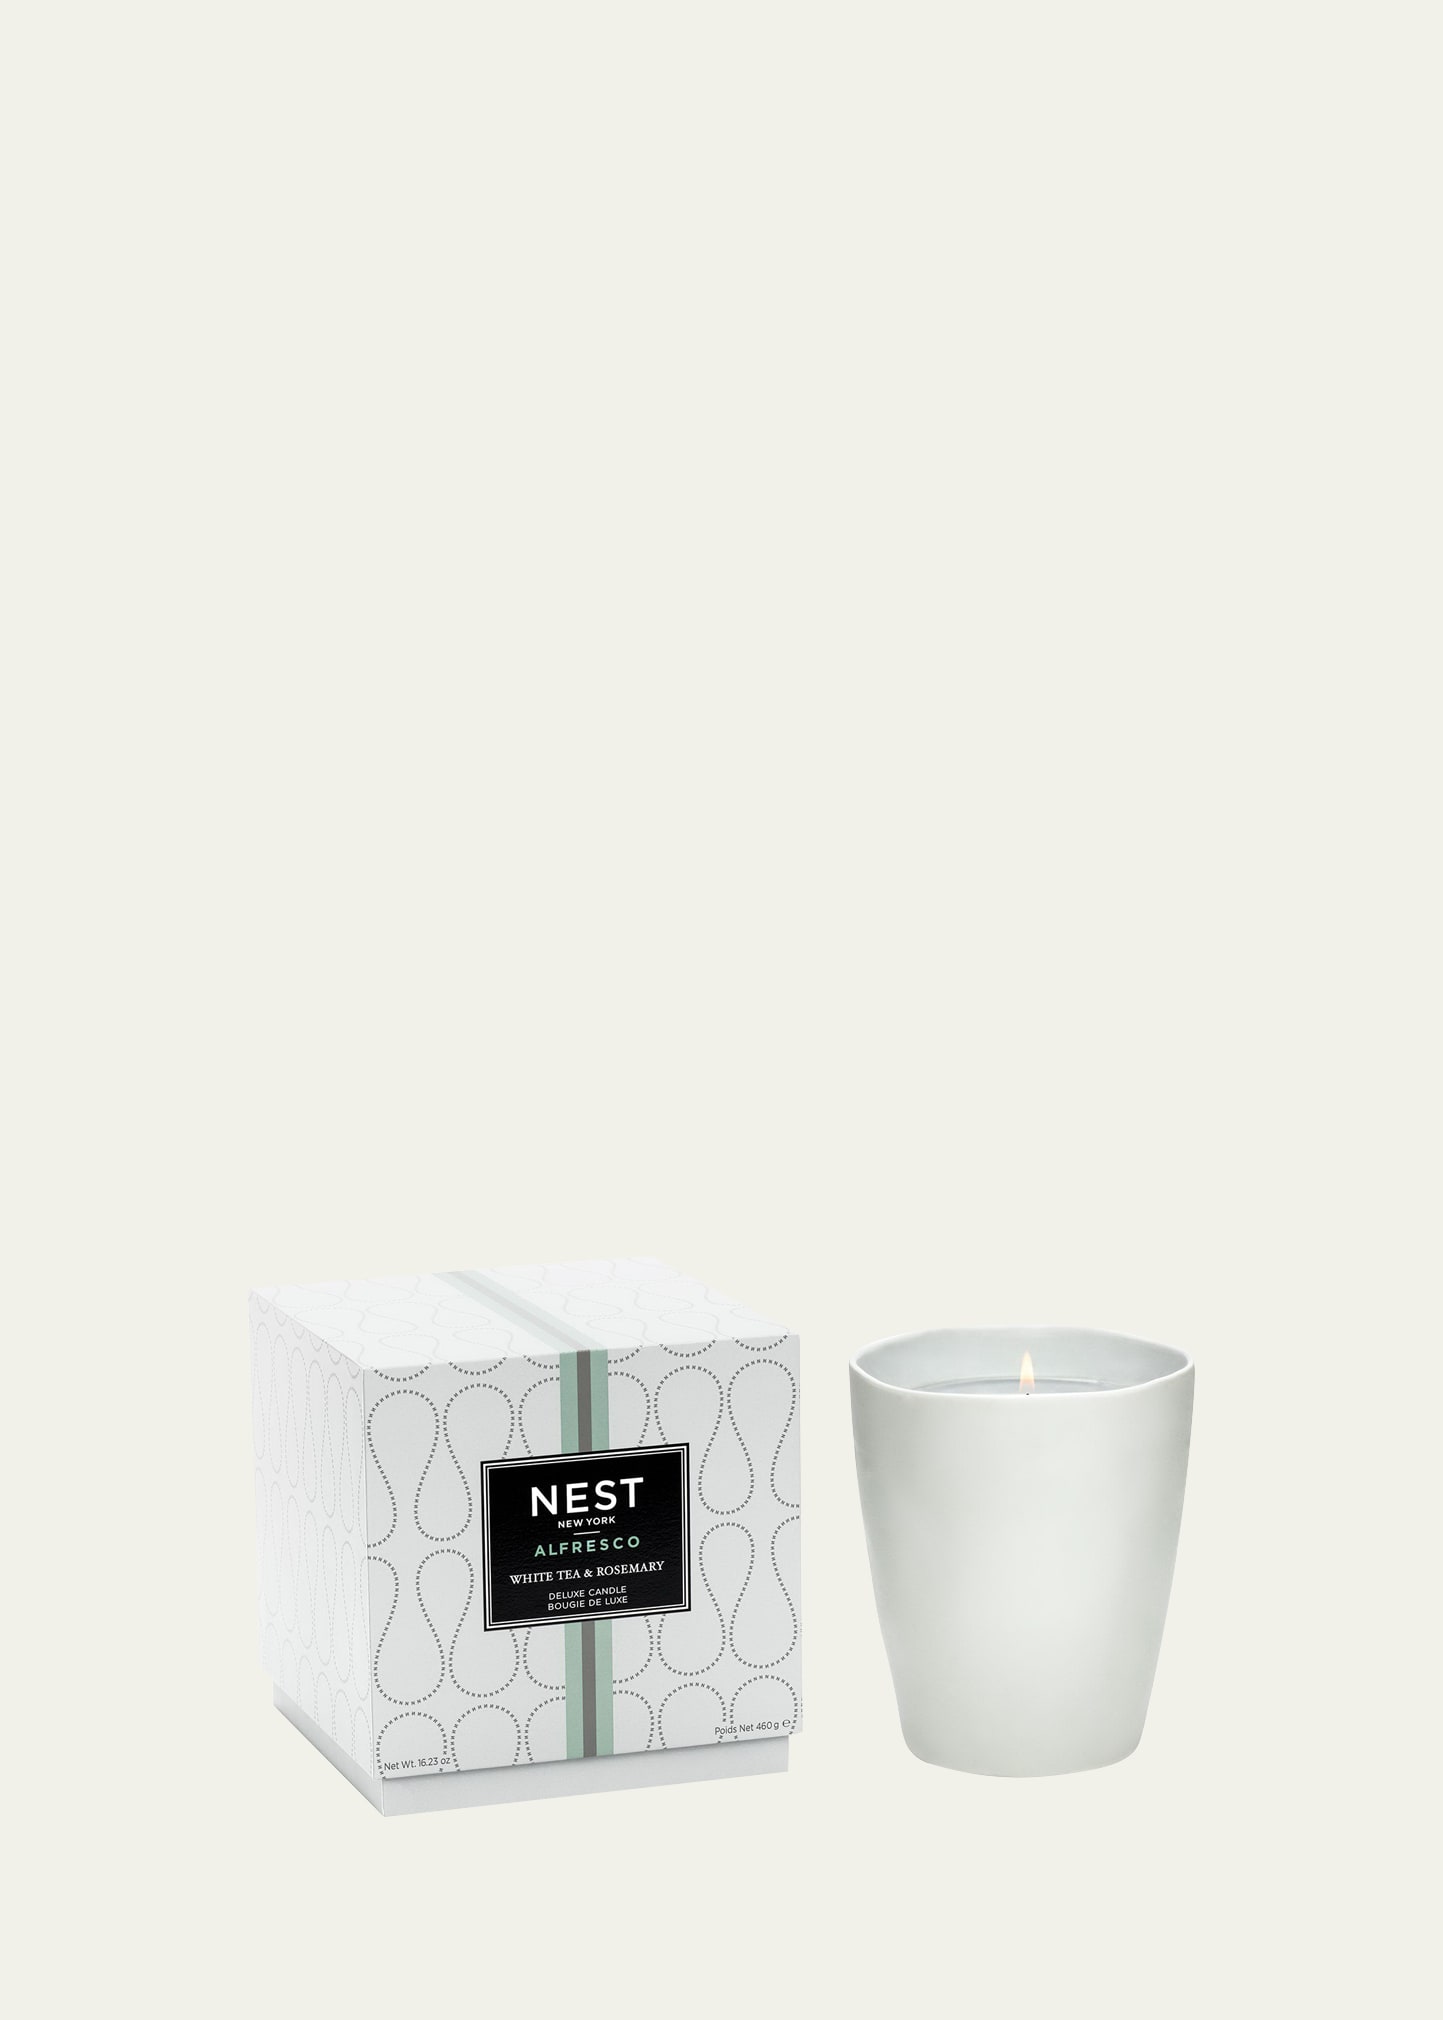 Nest New York White Tea And Rosemary Alfresco Classic Candle, 460 G